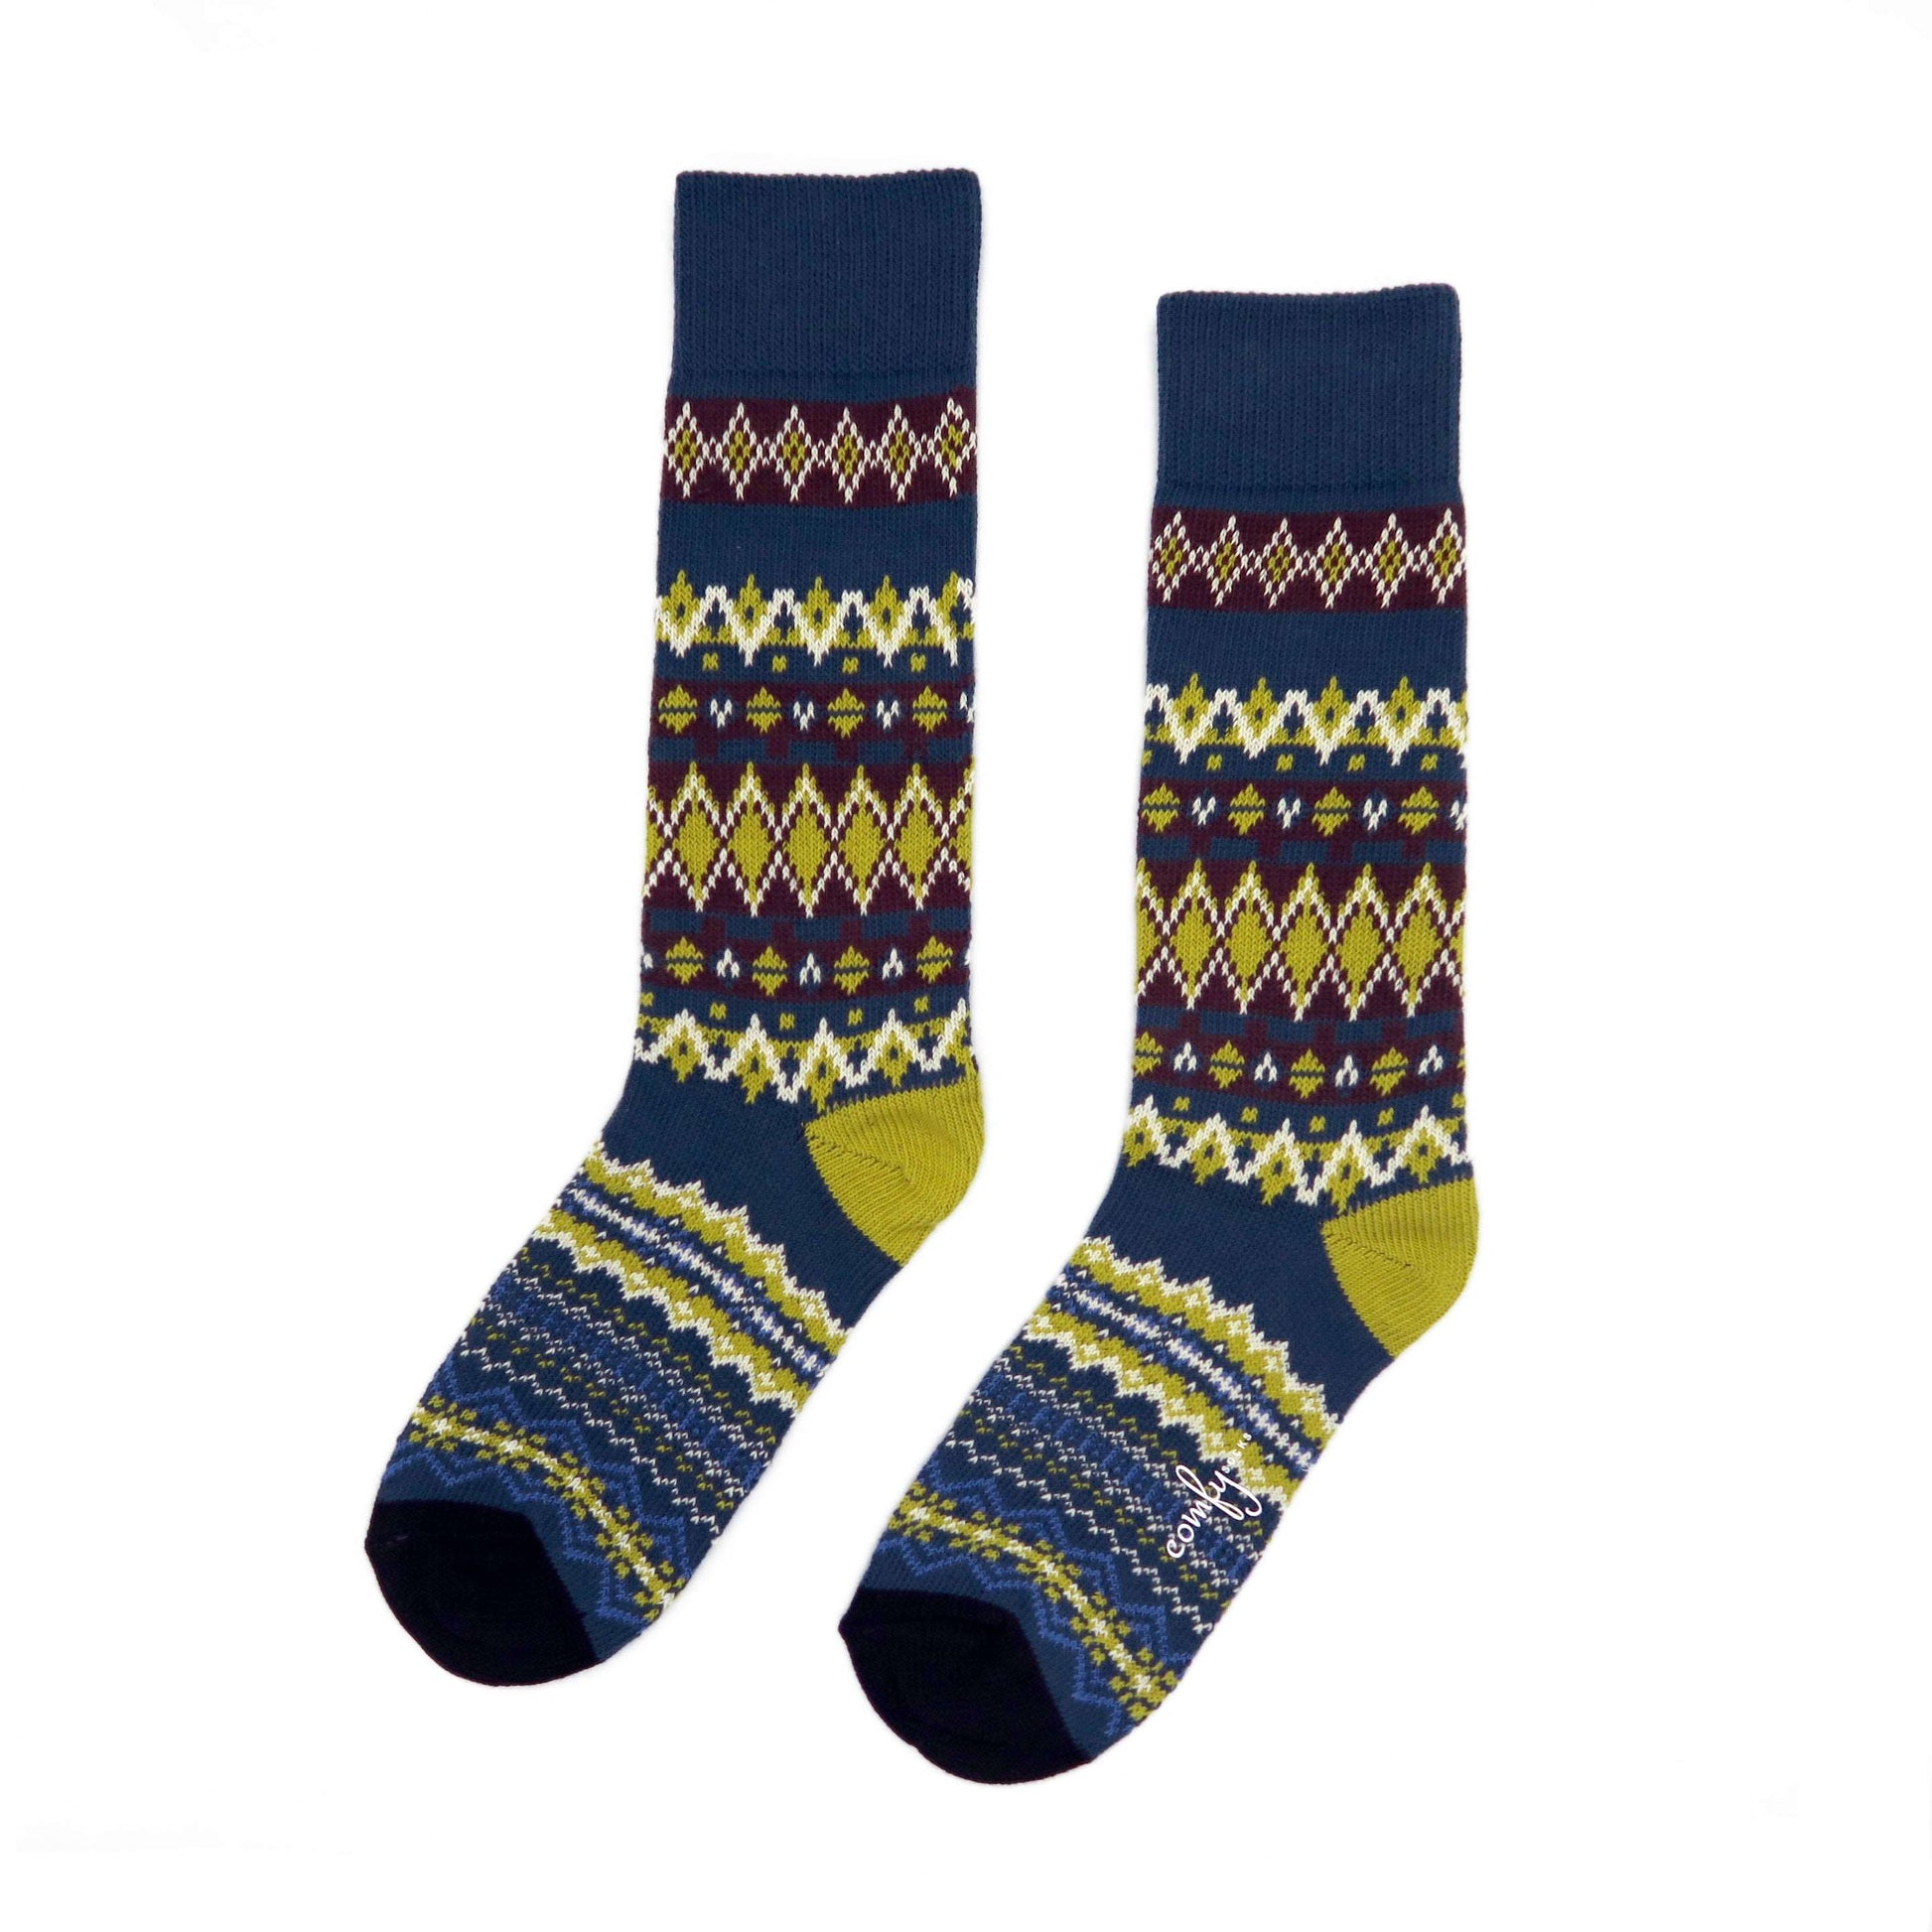 styrka sock - blue and yellow diamond pattern sock